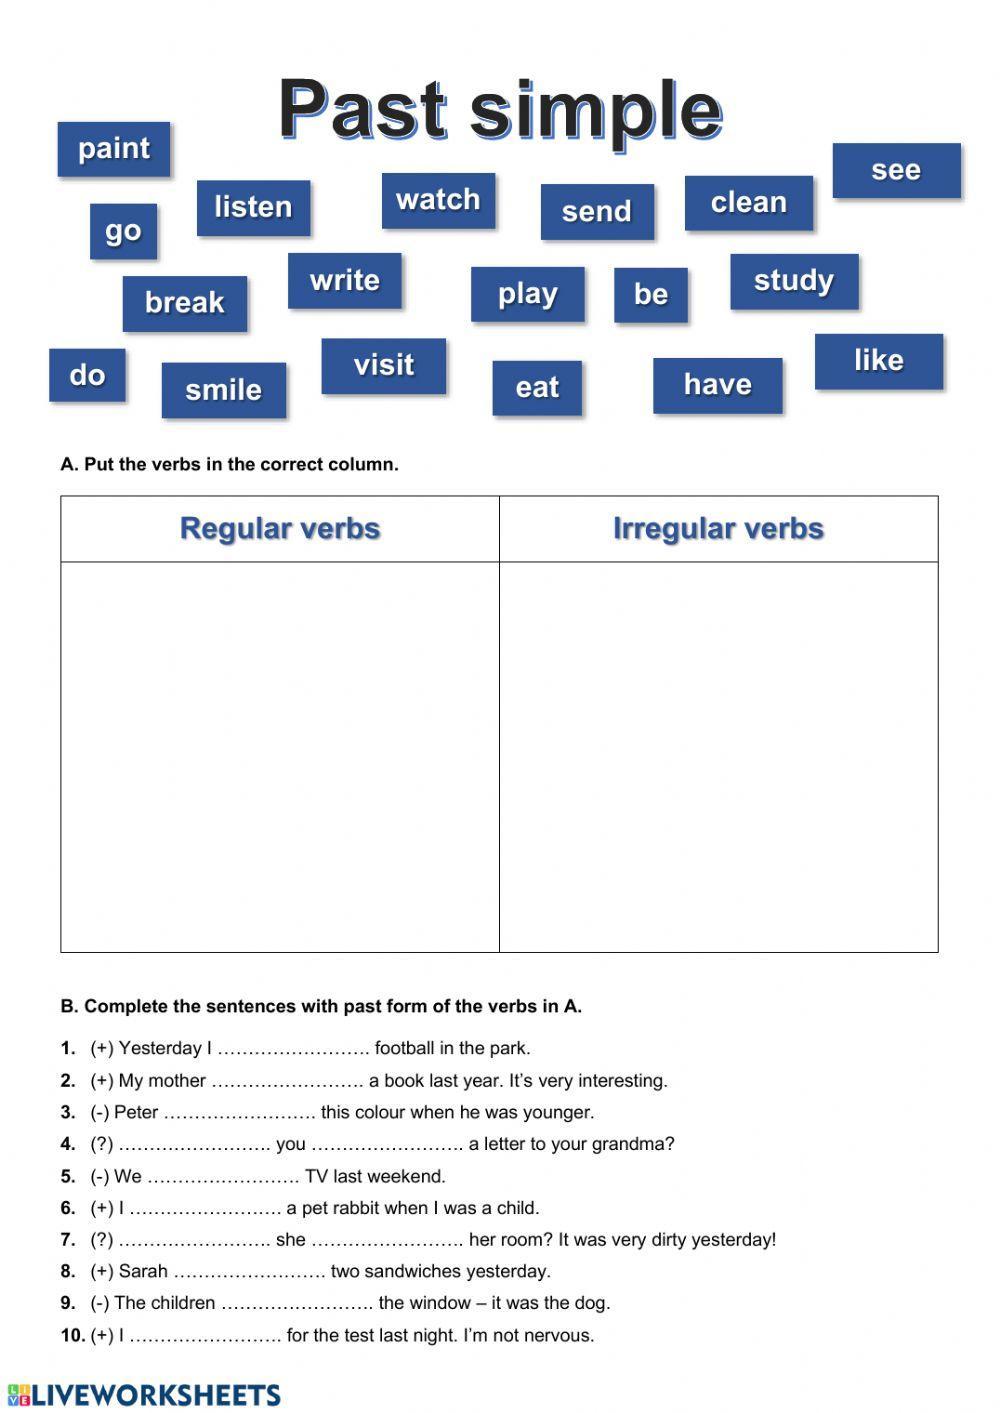 Past Simple - Regular and irregular verbs